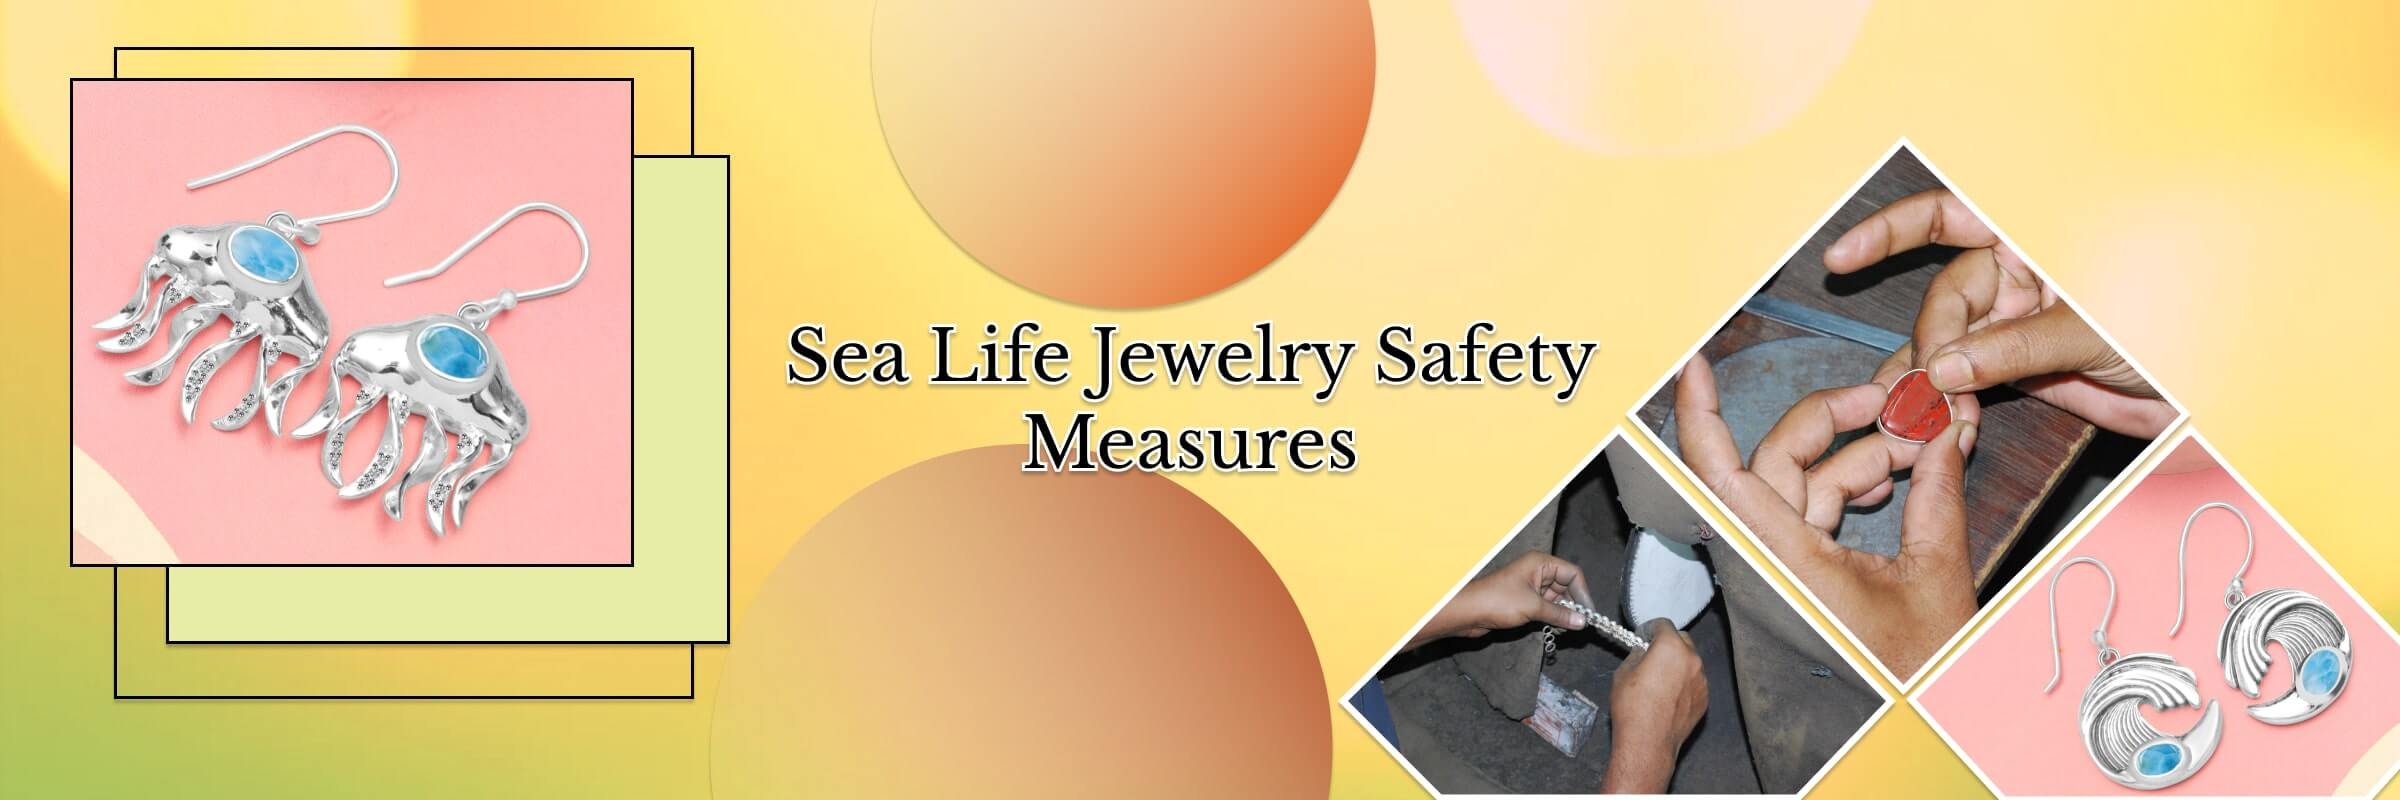 Precautions You Need To Take As You Wear The Sea Life Jewelry